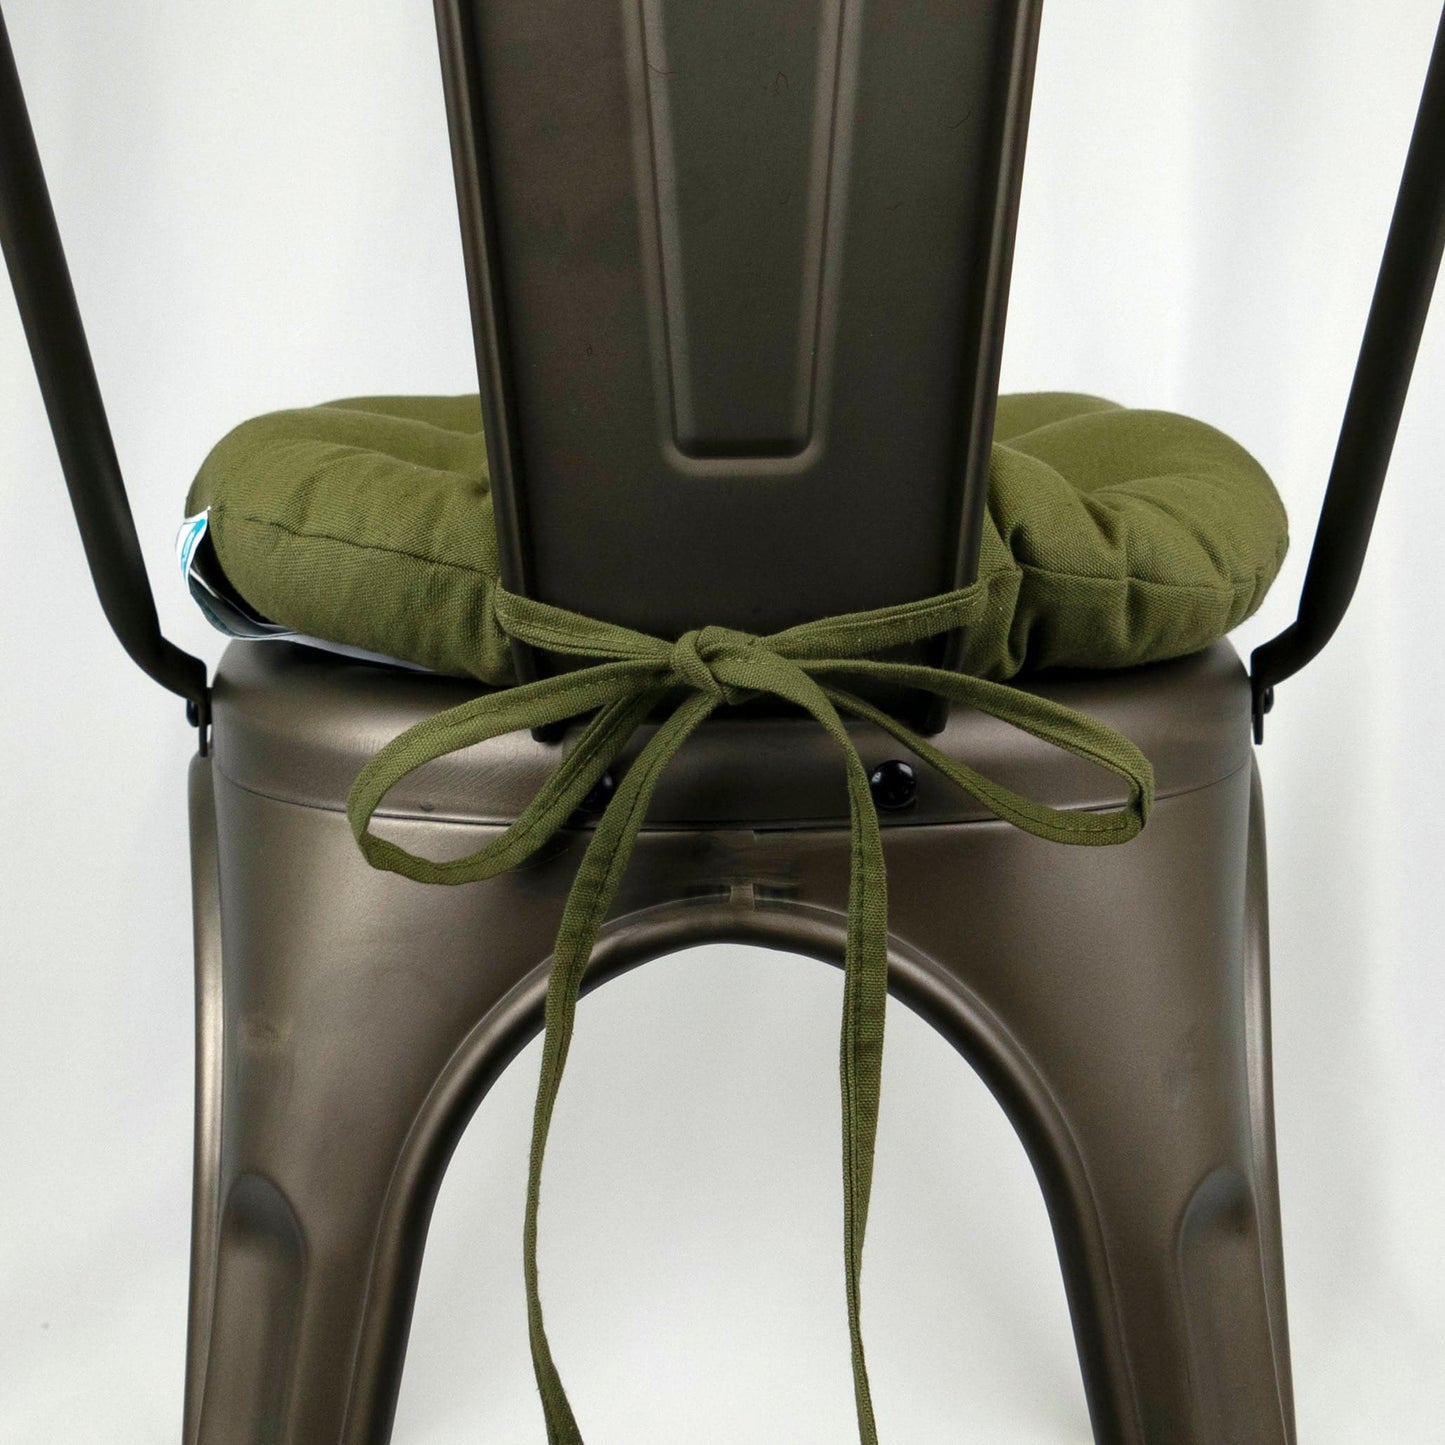 Cotton Duck Boxwood Green Industrial Chair Cushion - Latex Foam Fill - Barnett Home Decor - Olive